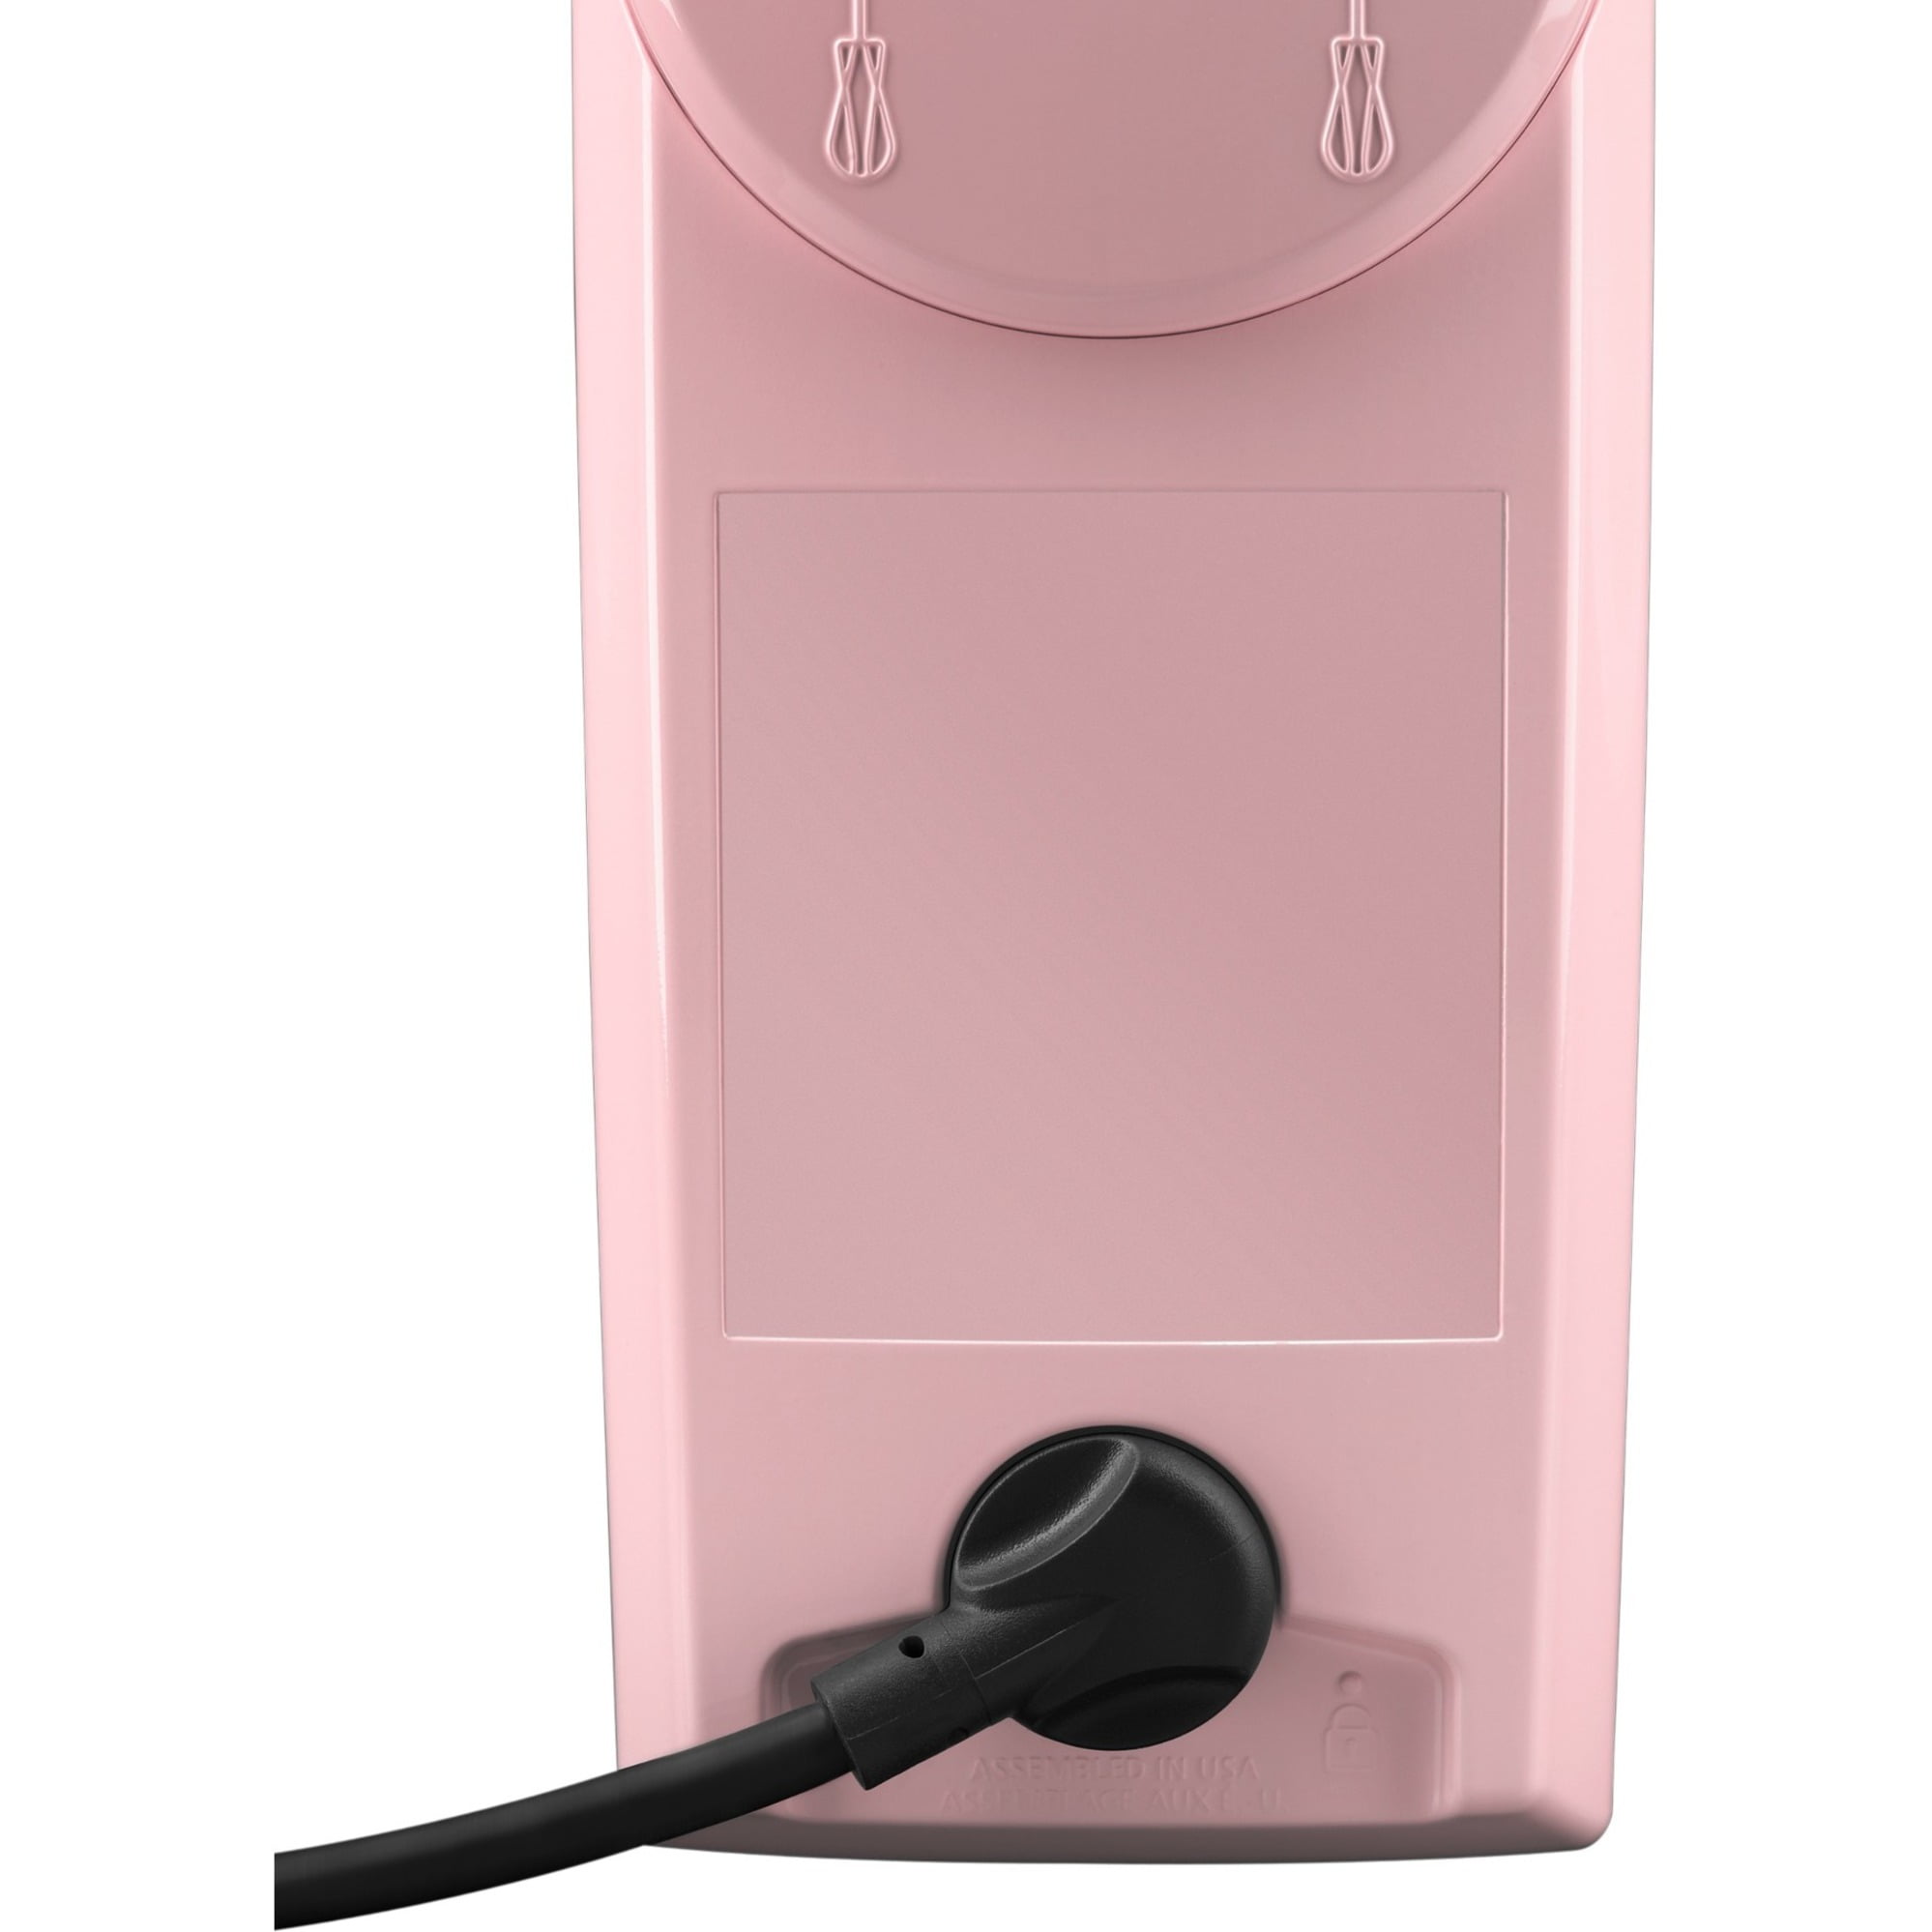 KitchenAid® 5-Speed Ultra Power™ Hand Mixer in Pink - Thepinkstore